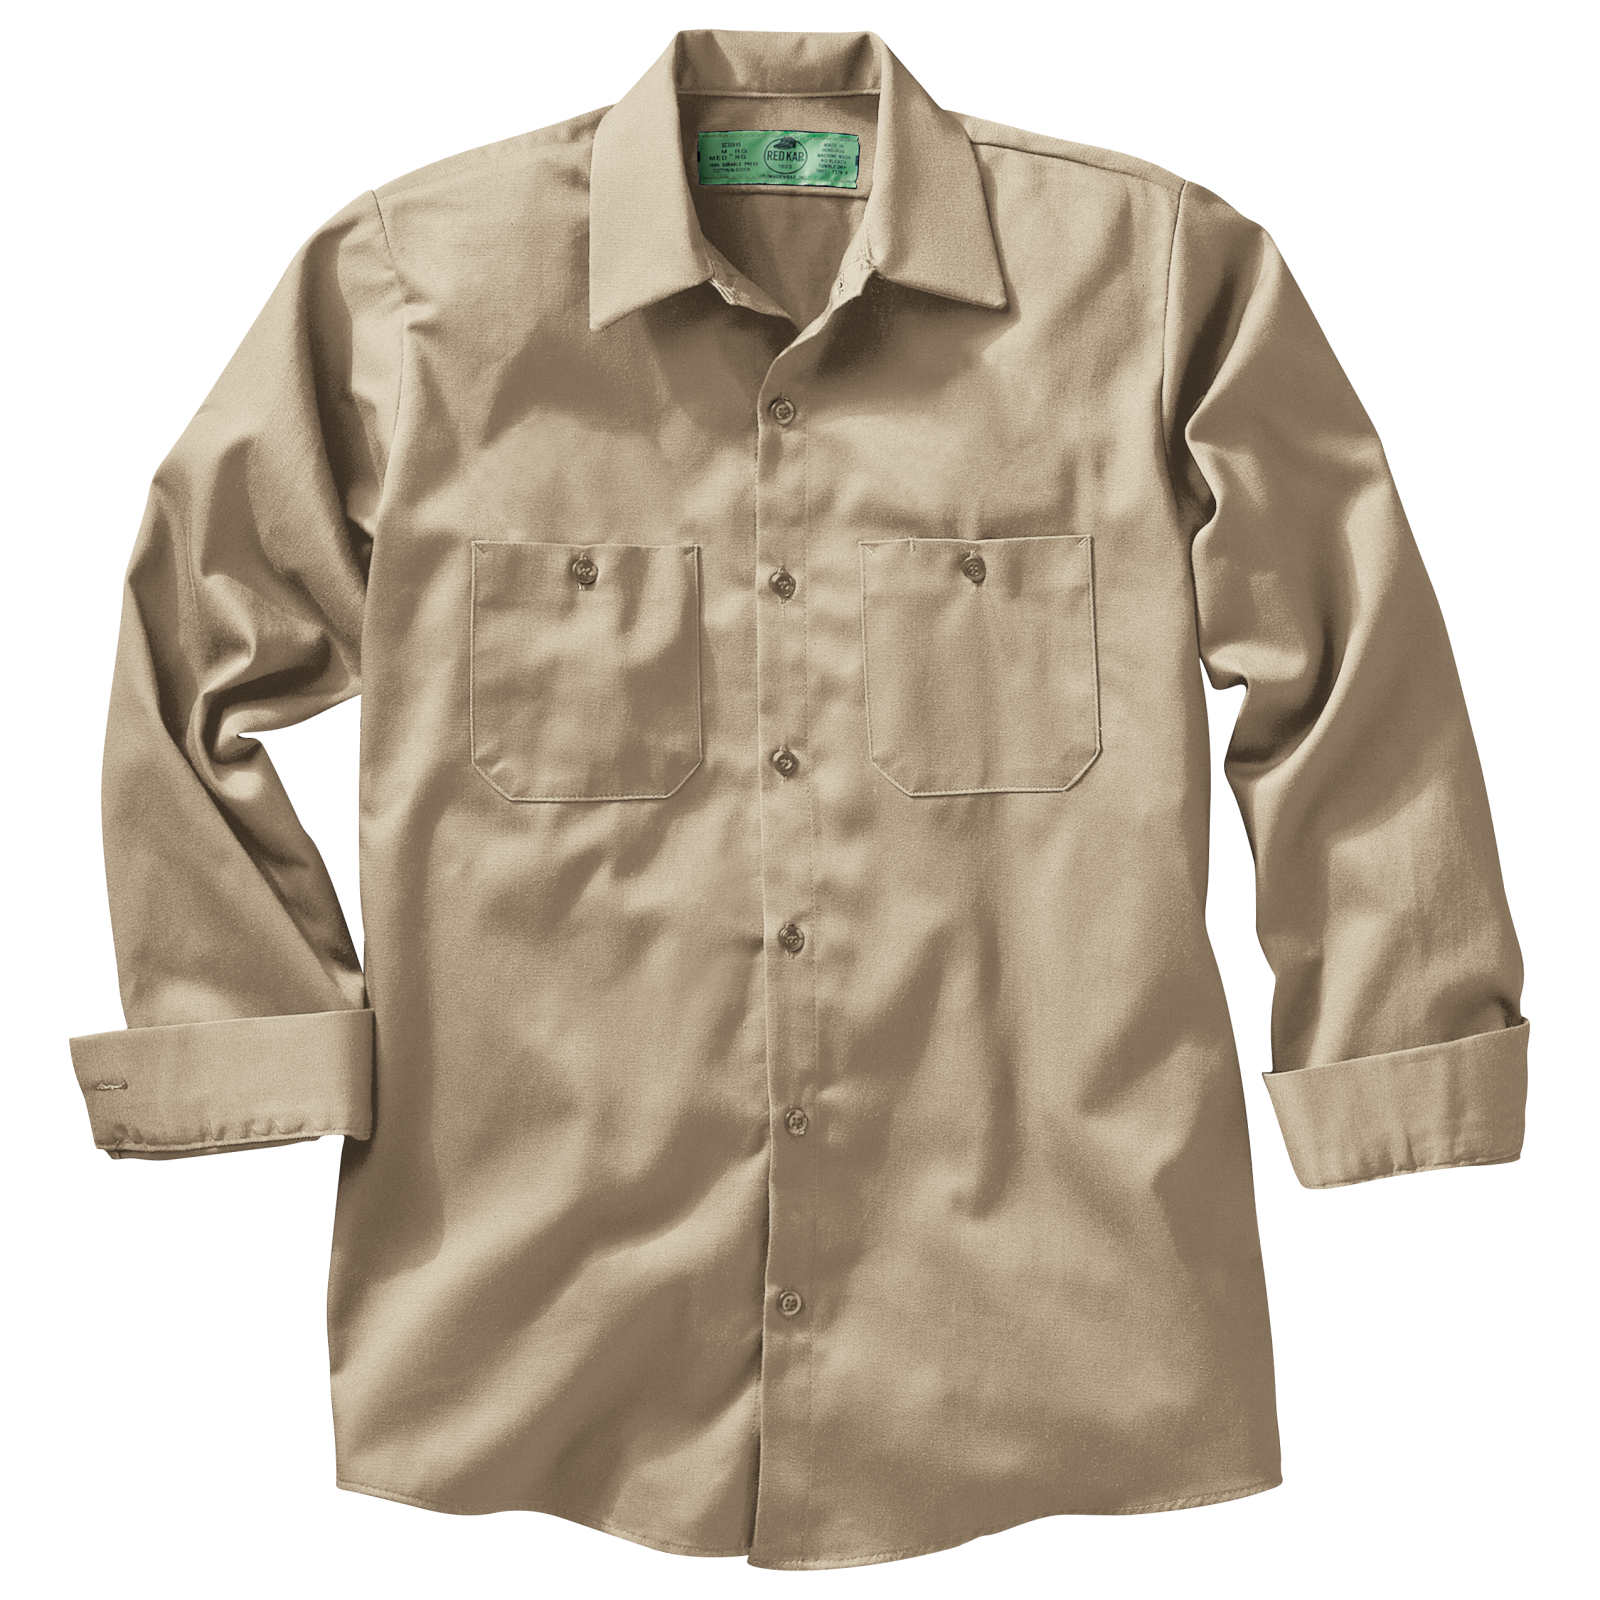 Red Kap Work Shirt 100% Cotton 2 Pocket Men's Durable Industrial Uniform 